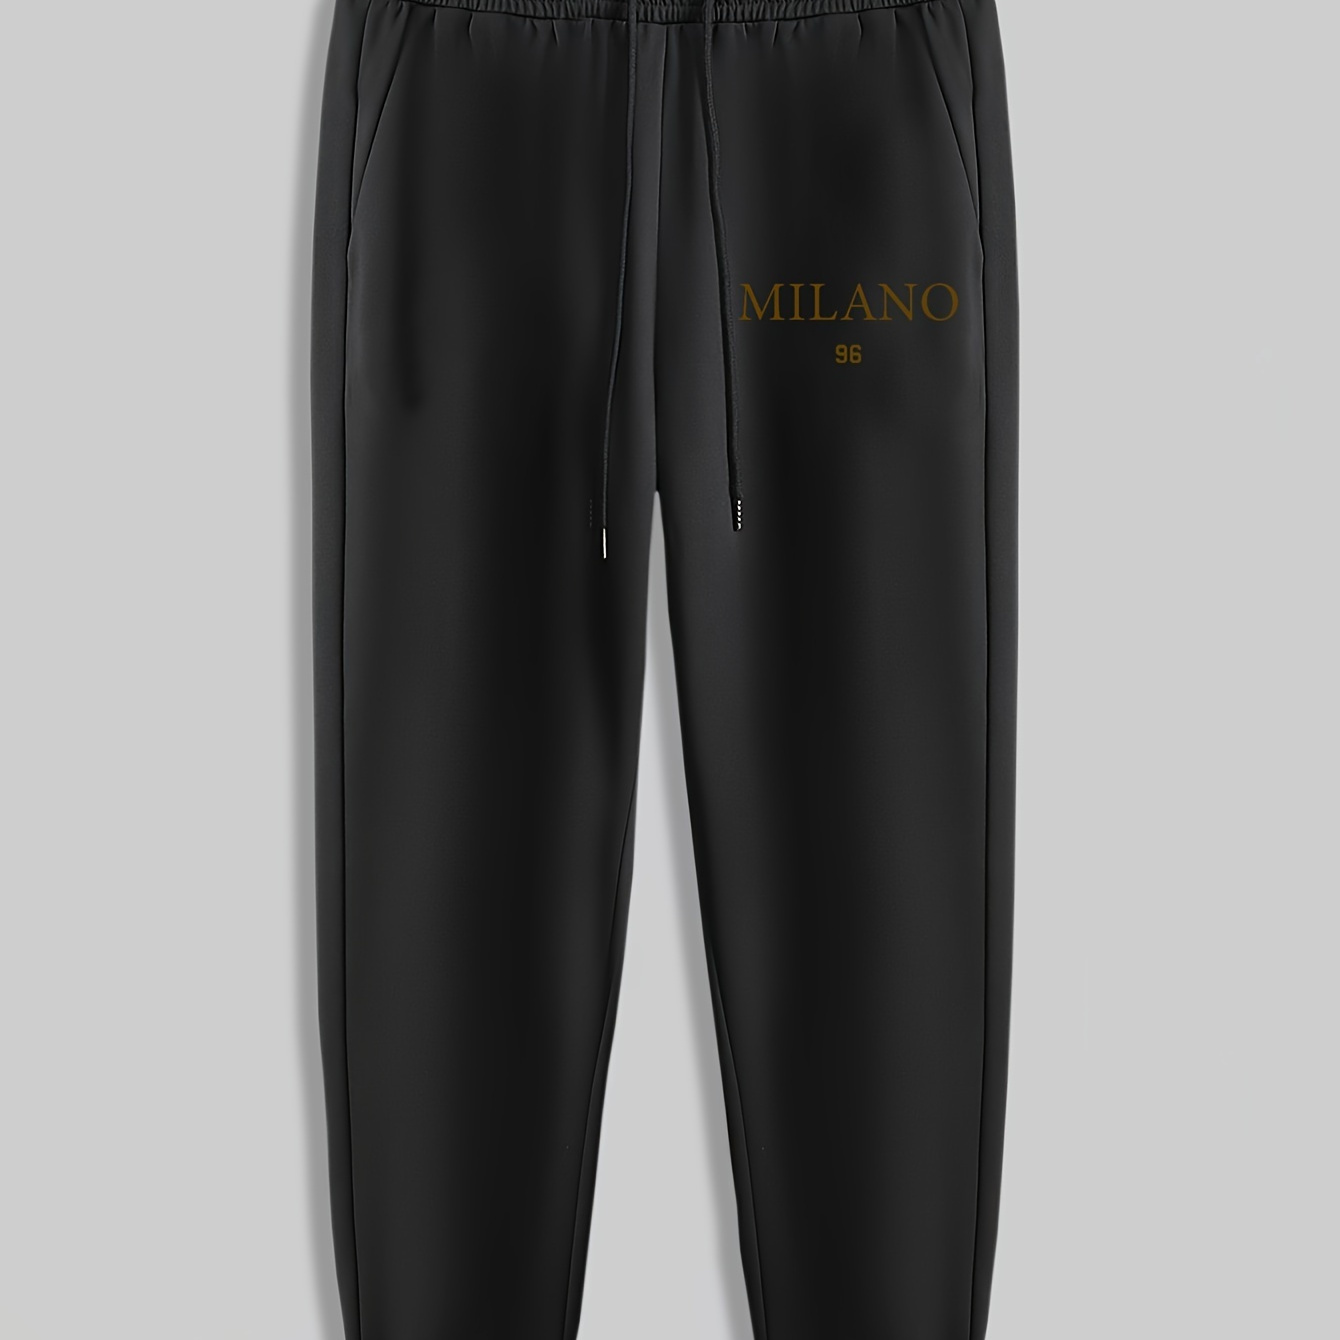 

Milano Print Men's Pants Drawstring Sweatpants Loose Casual Trousers For Spring Autumn Running Jogging